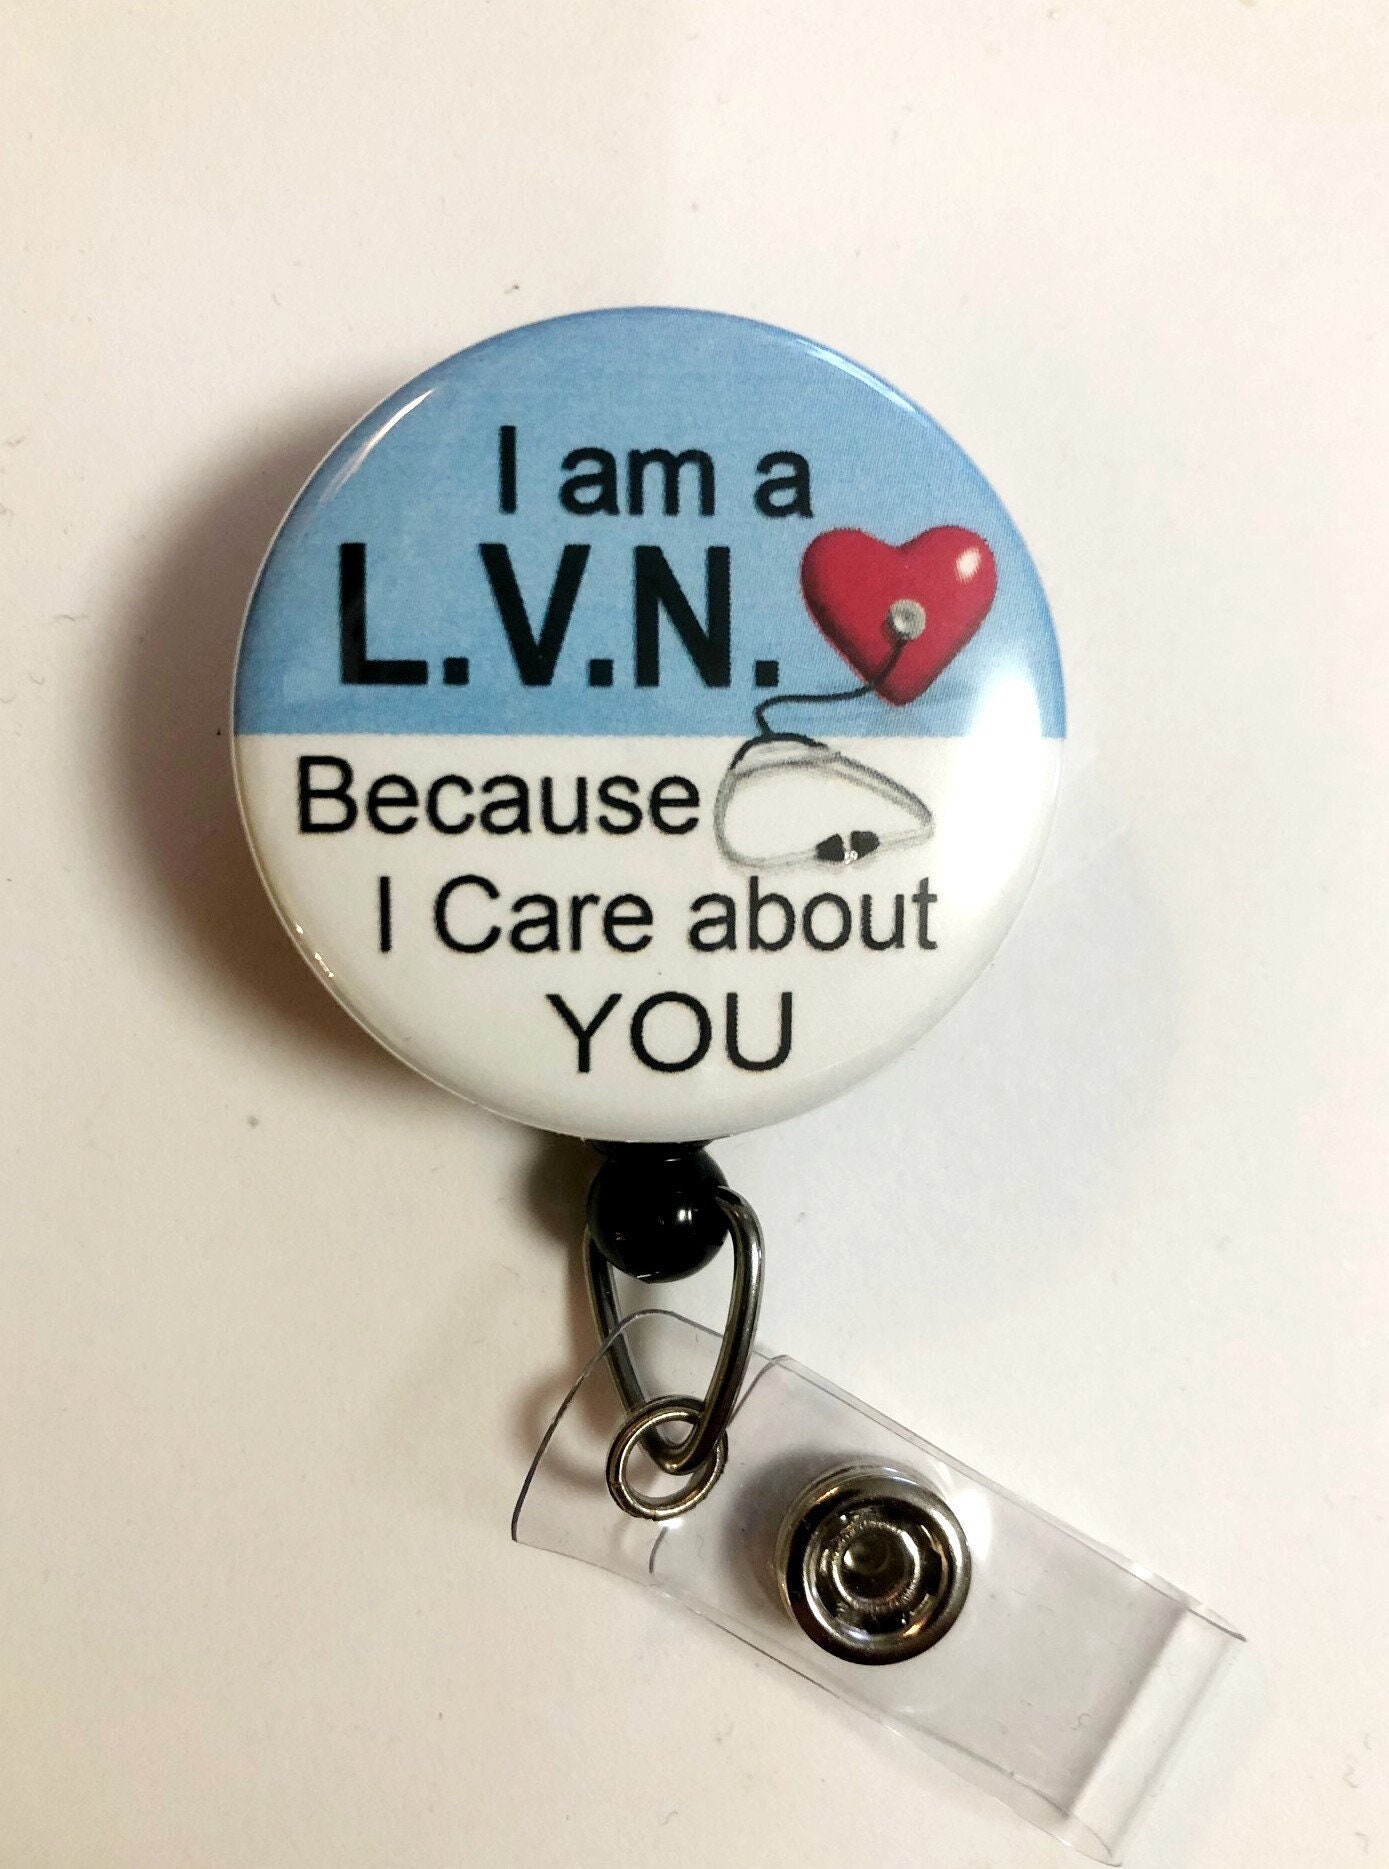 I Am a LVN licensed Vocational Nurse Because I Care About 